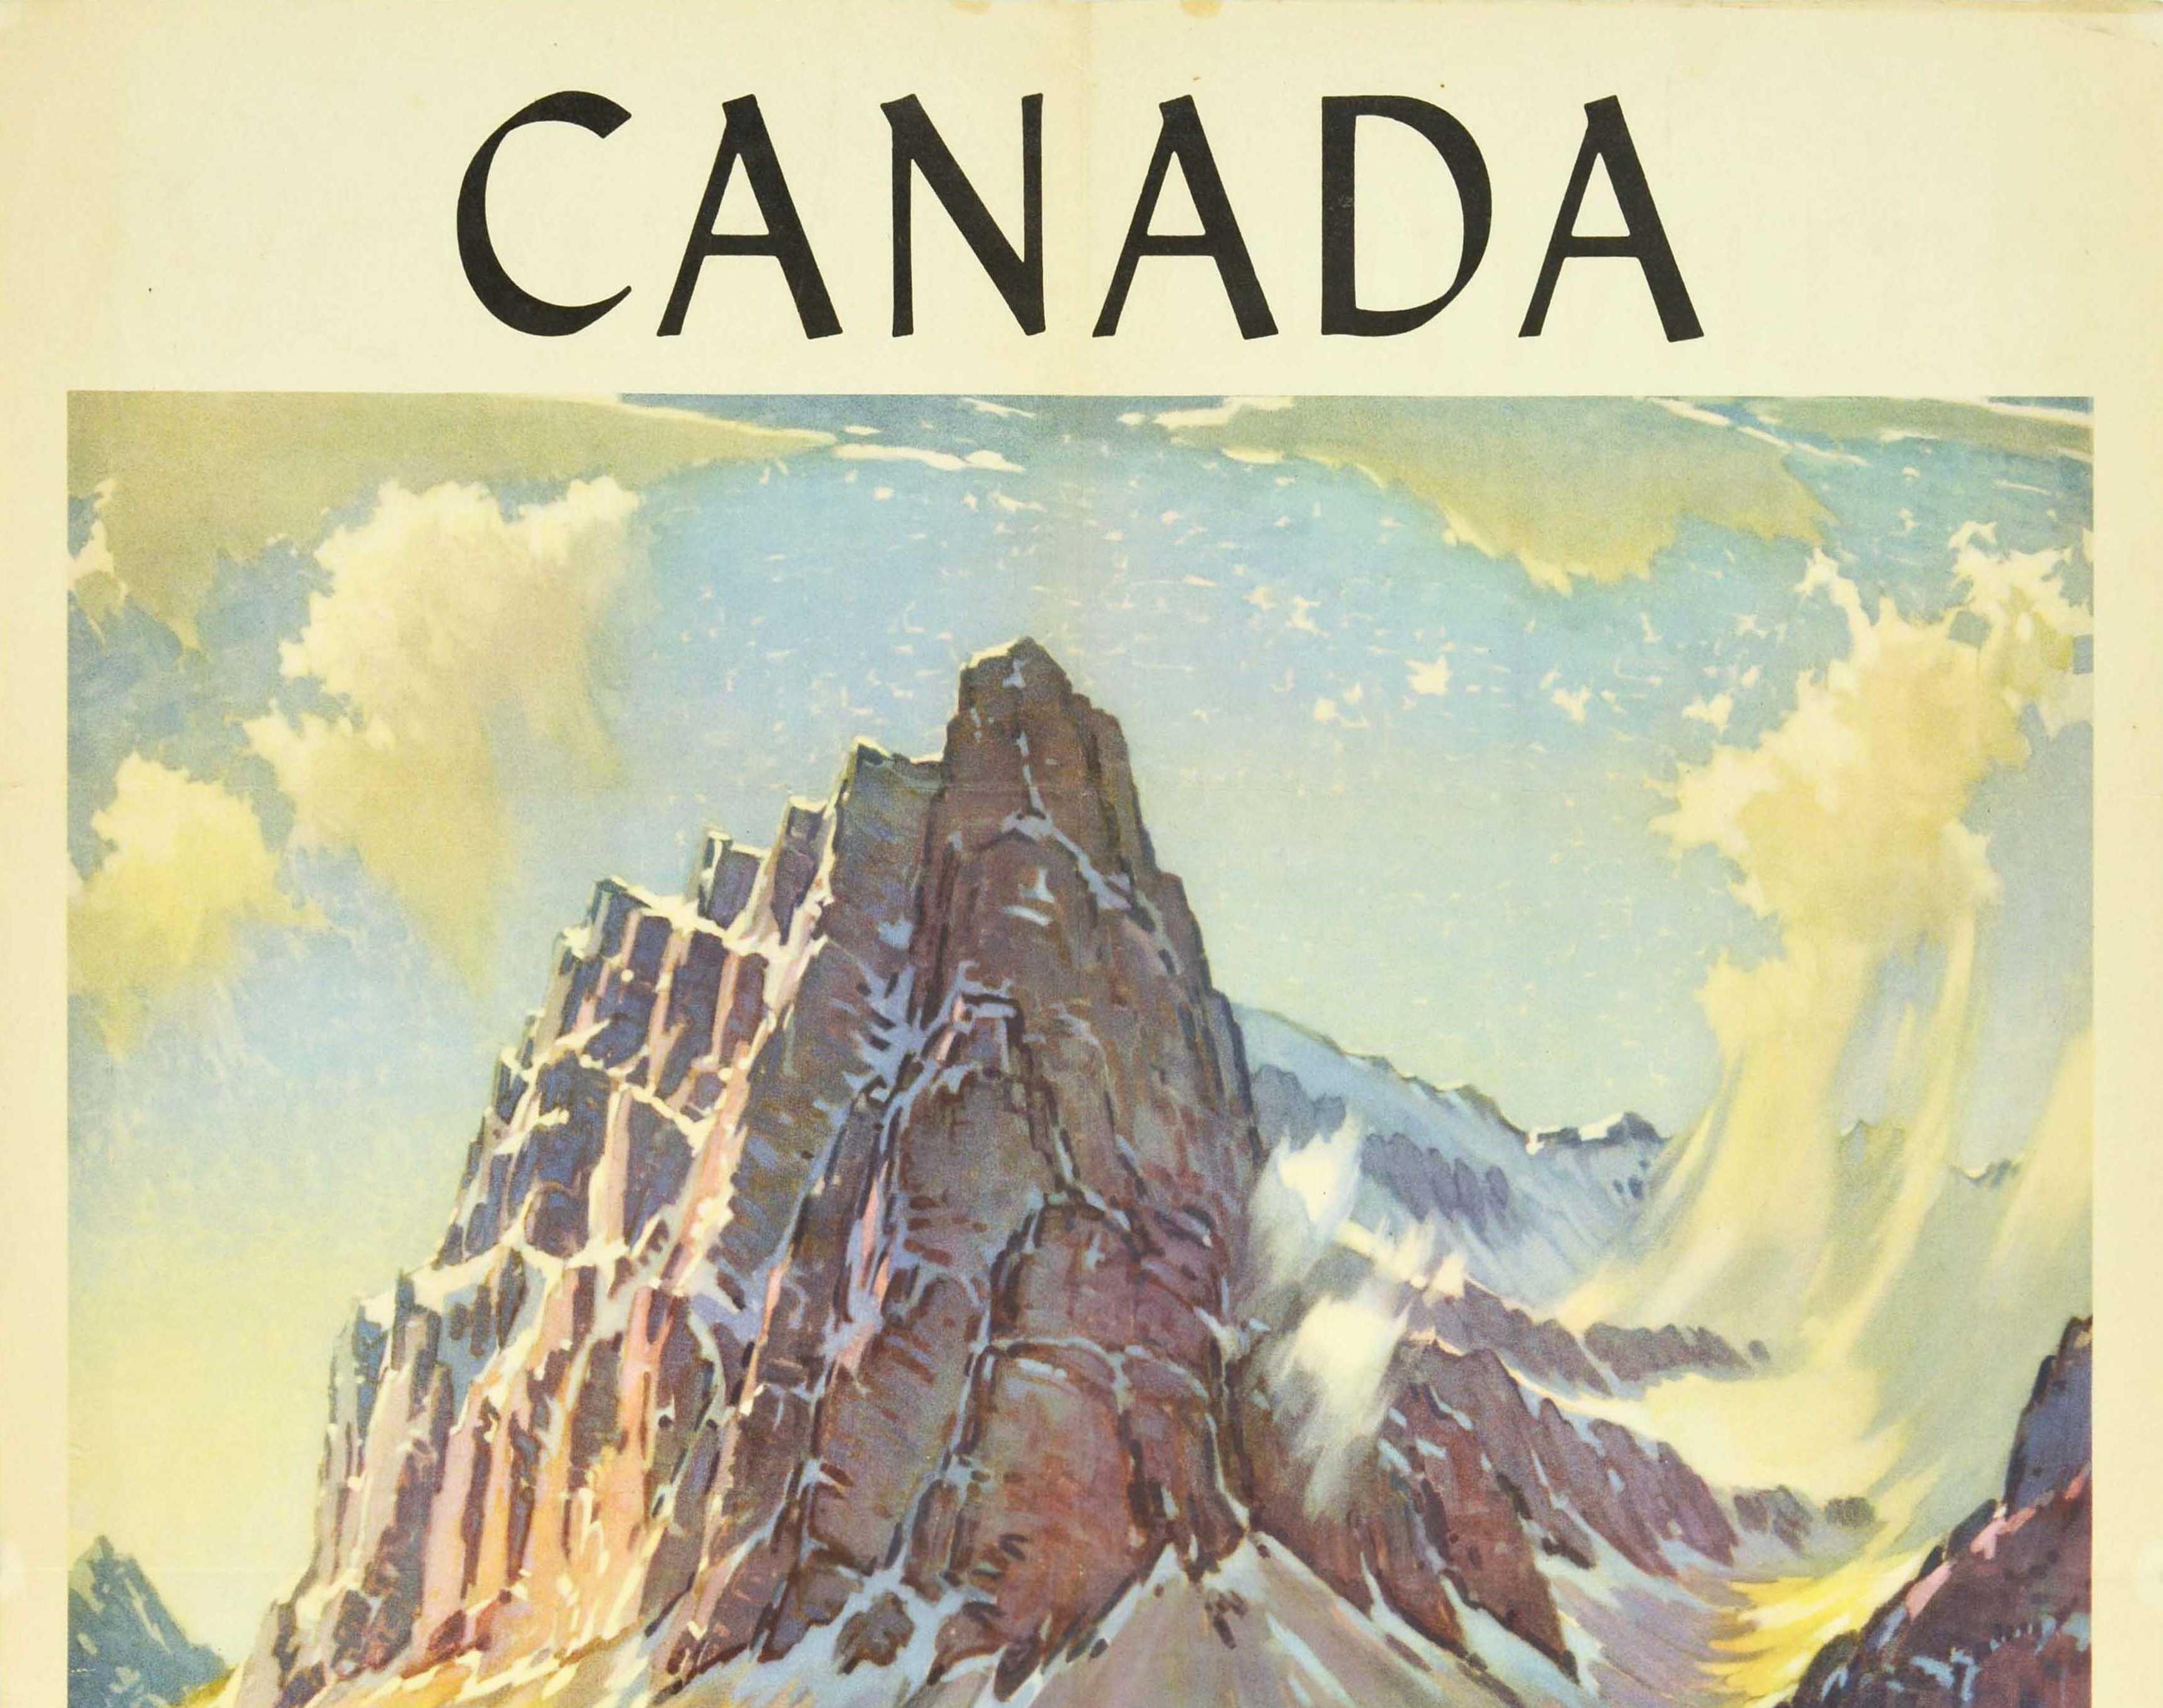 Original Vintage Travel Poster Canadian Rockies Mount Eisenhower Castle Mountain - Print by A.C. Leighton